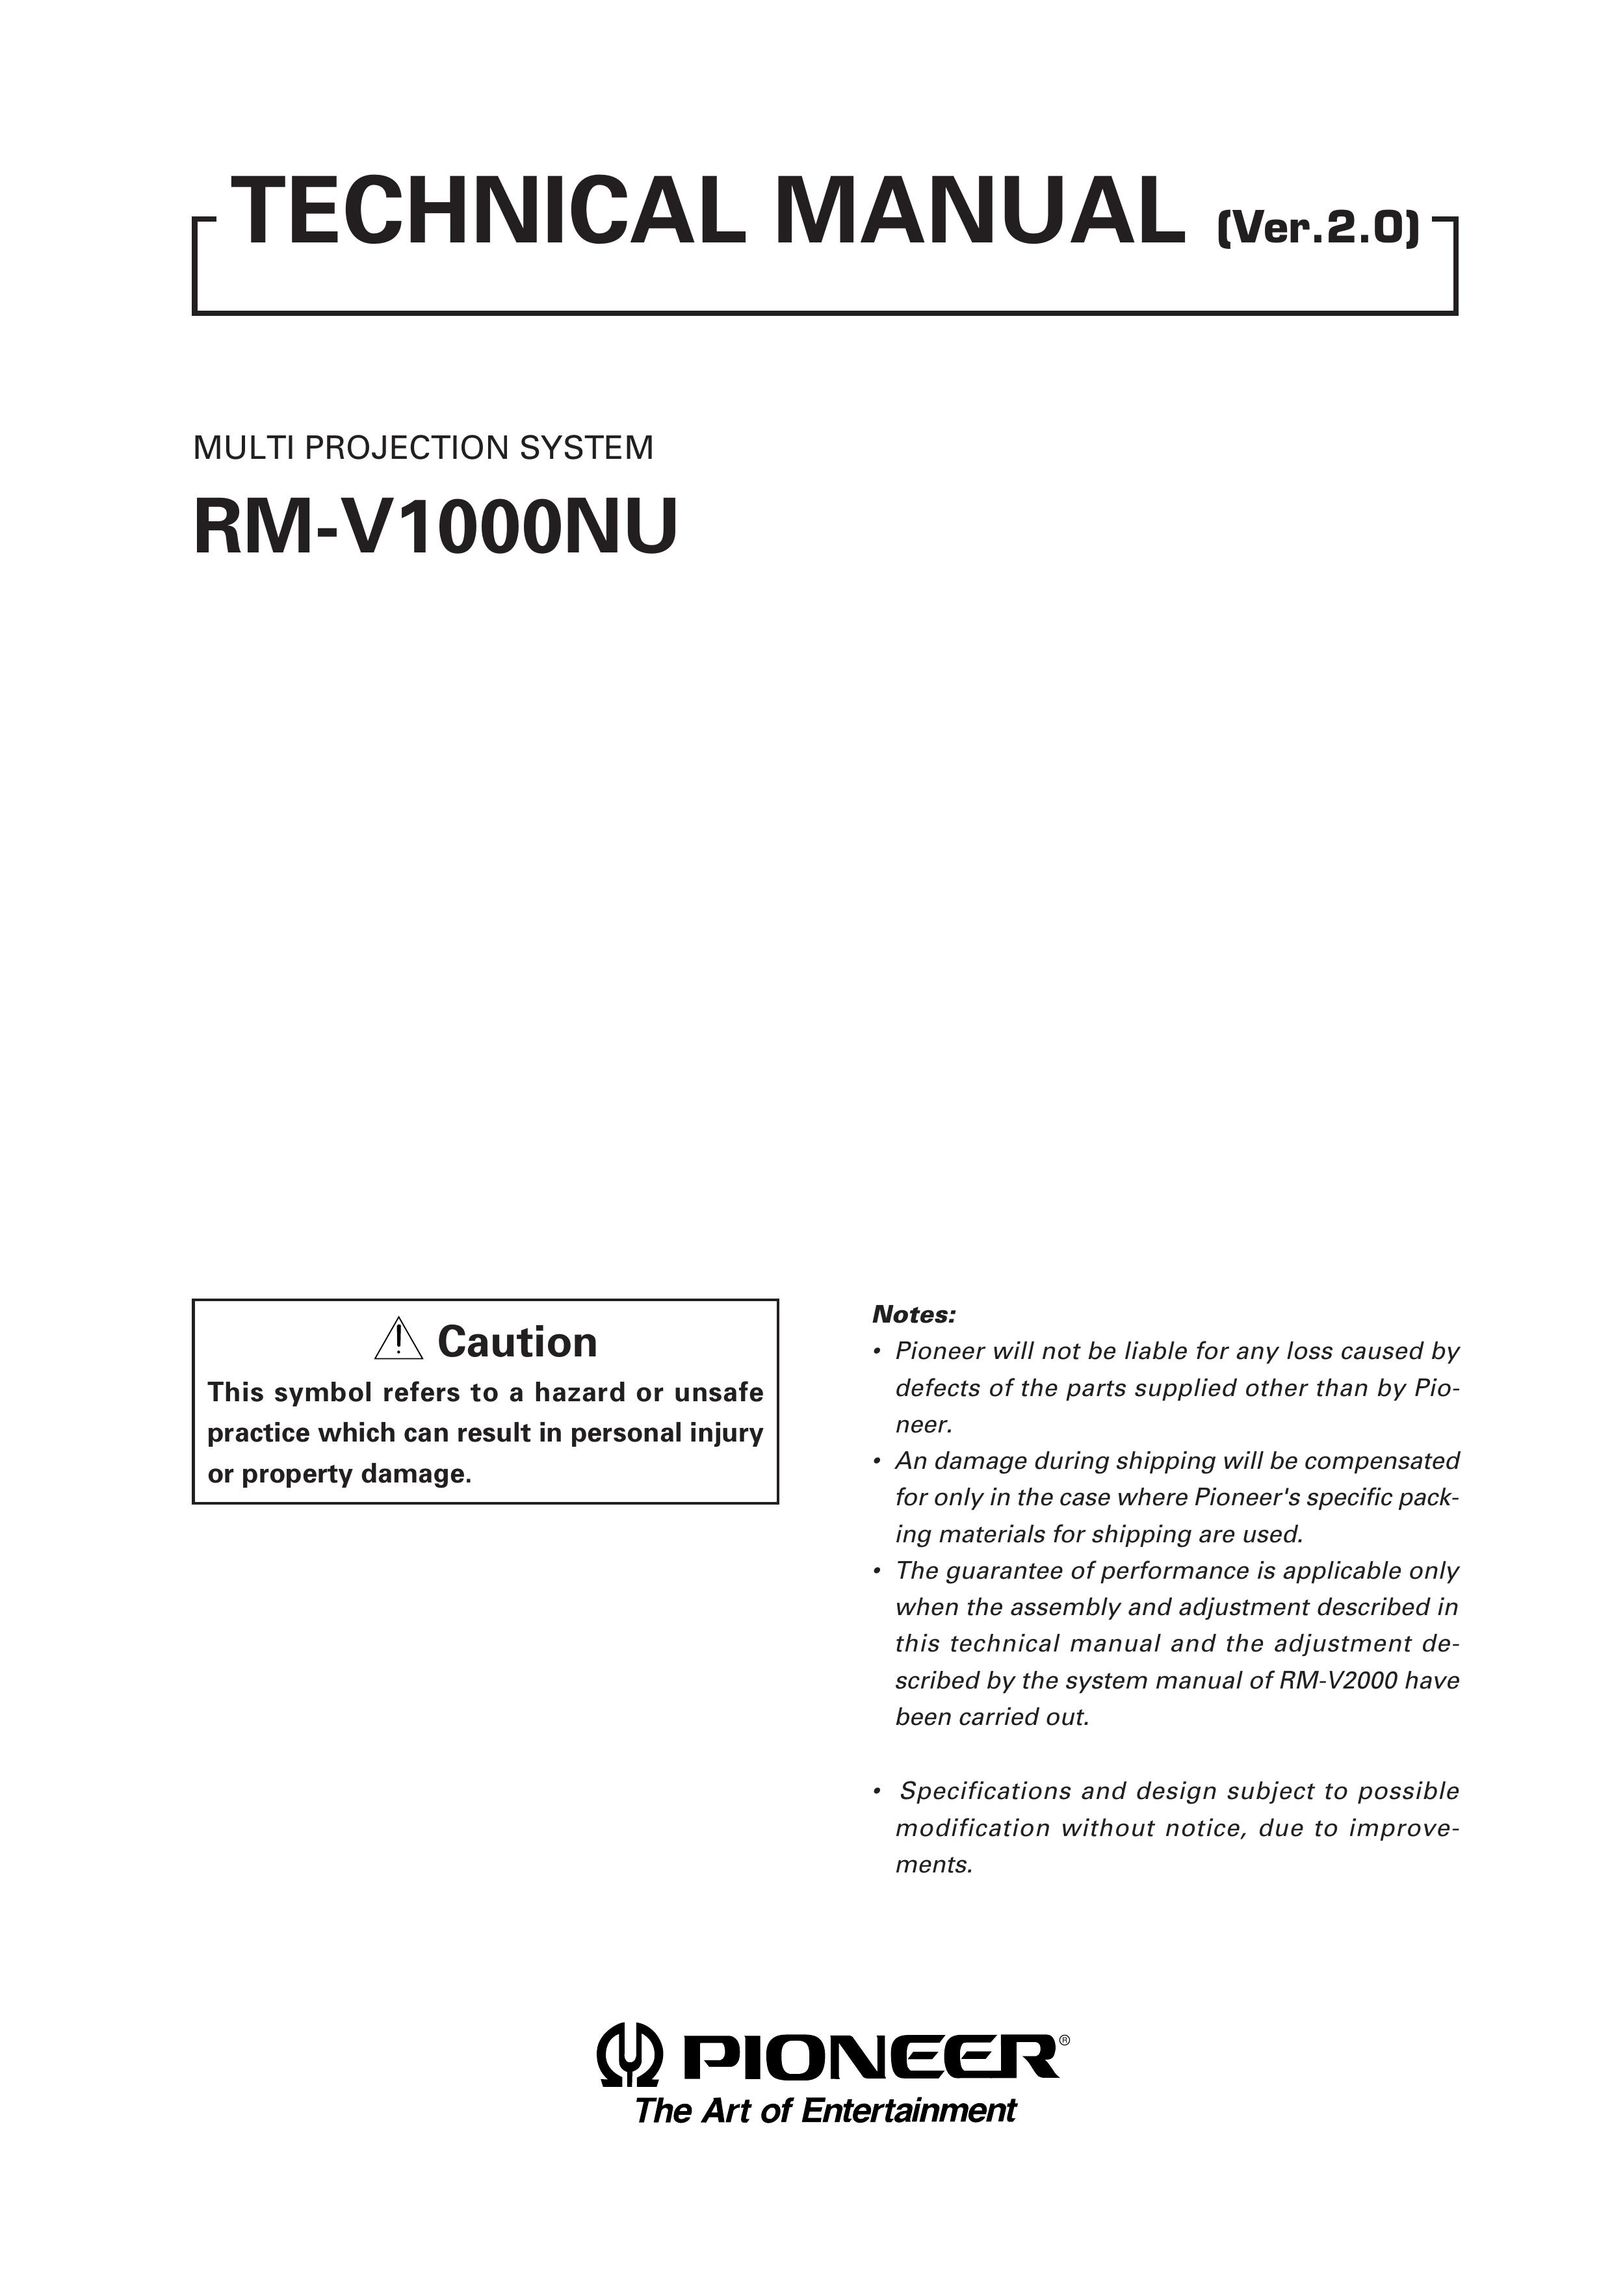 Pioneer RM-V1000NU Projector User Manual